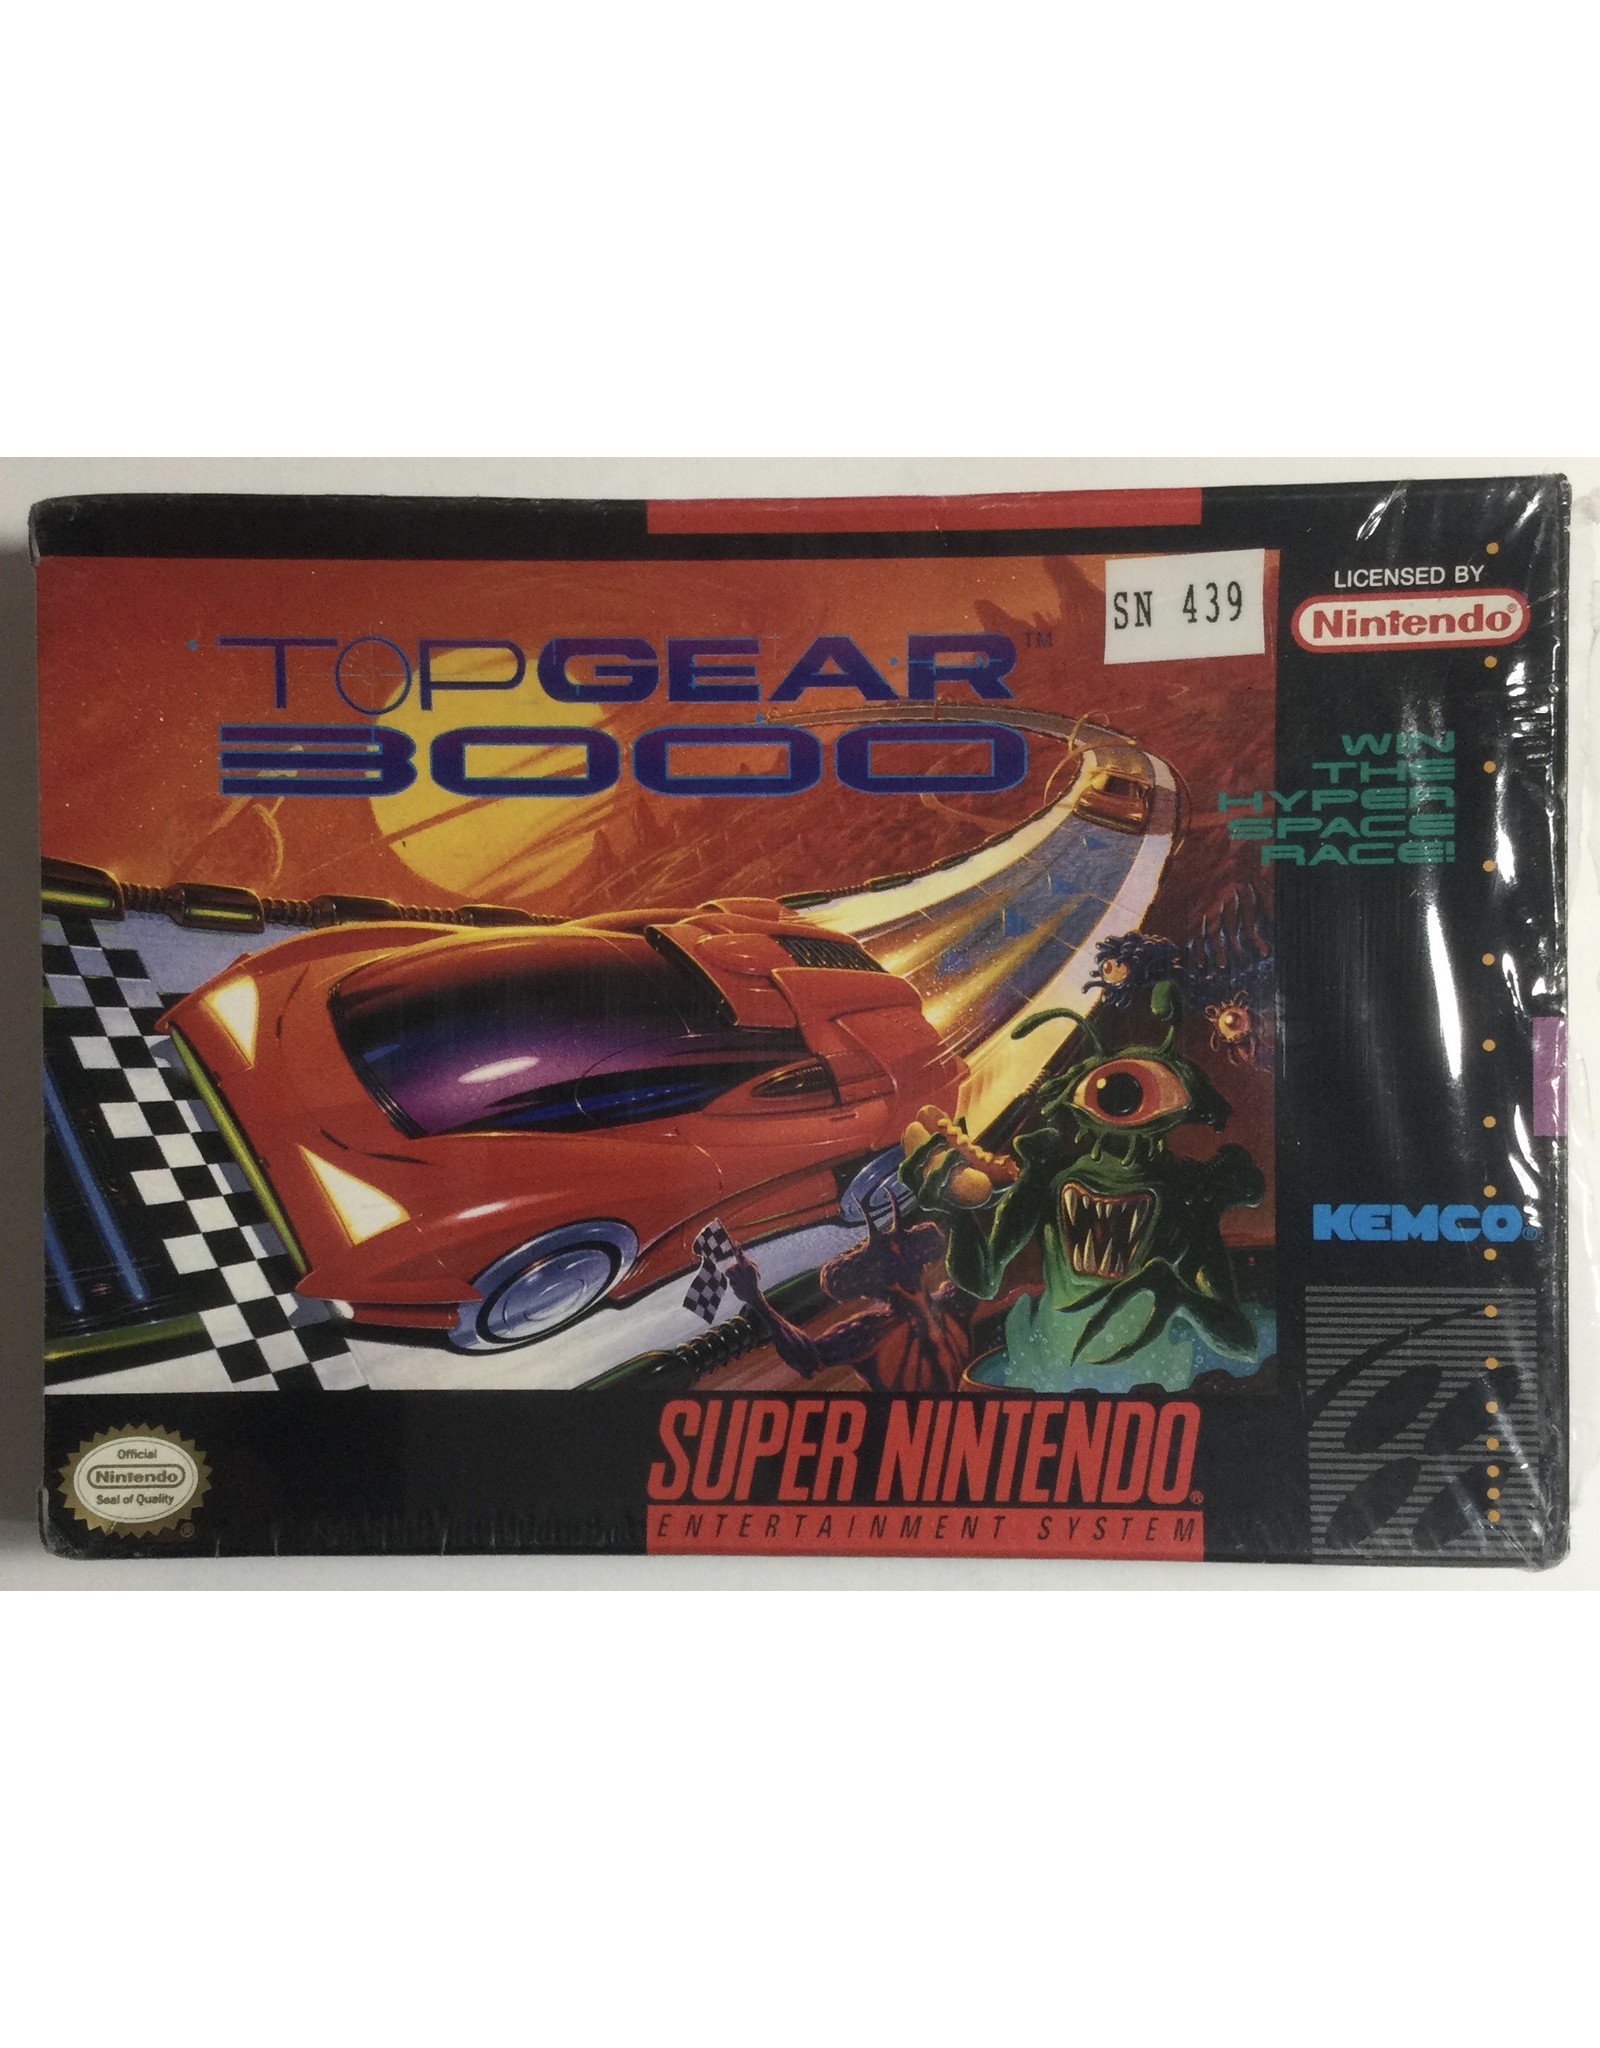 KEMCO SEIKA Top Gear 3000 for Super Nintendo Entertainment System (SNES)